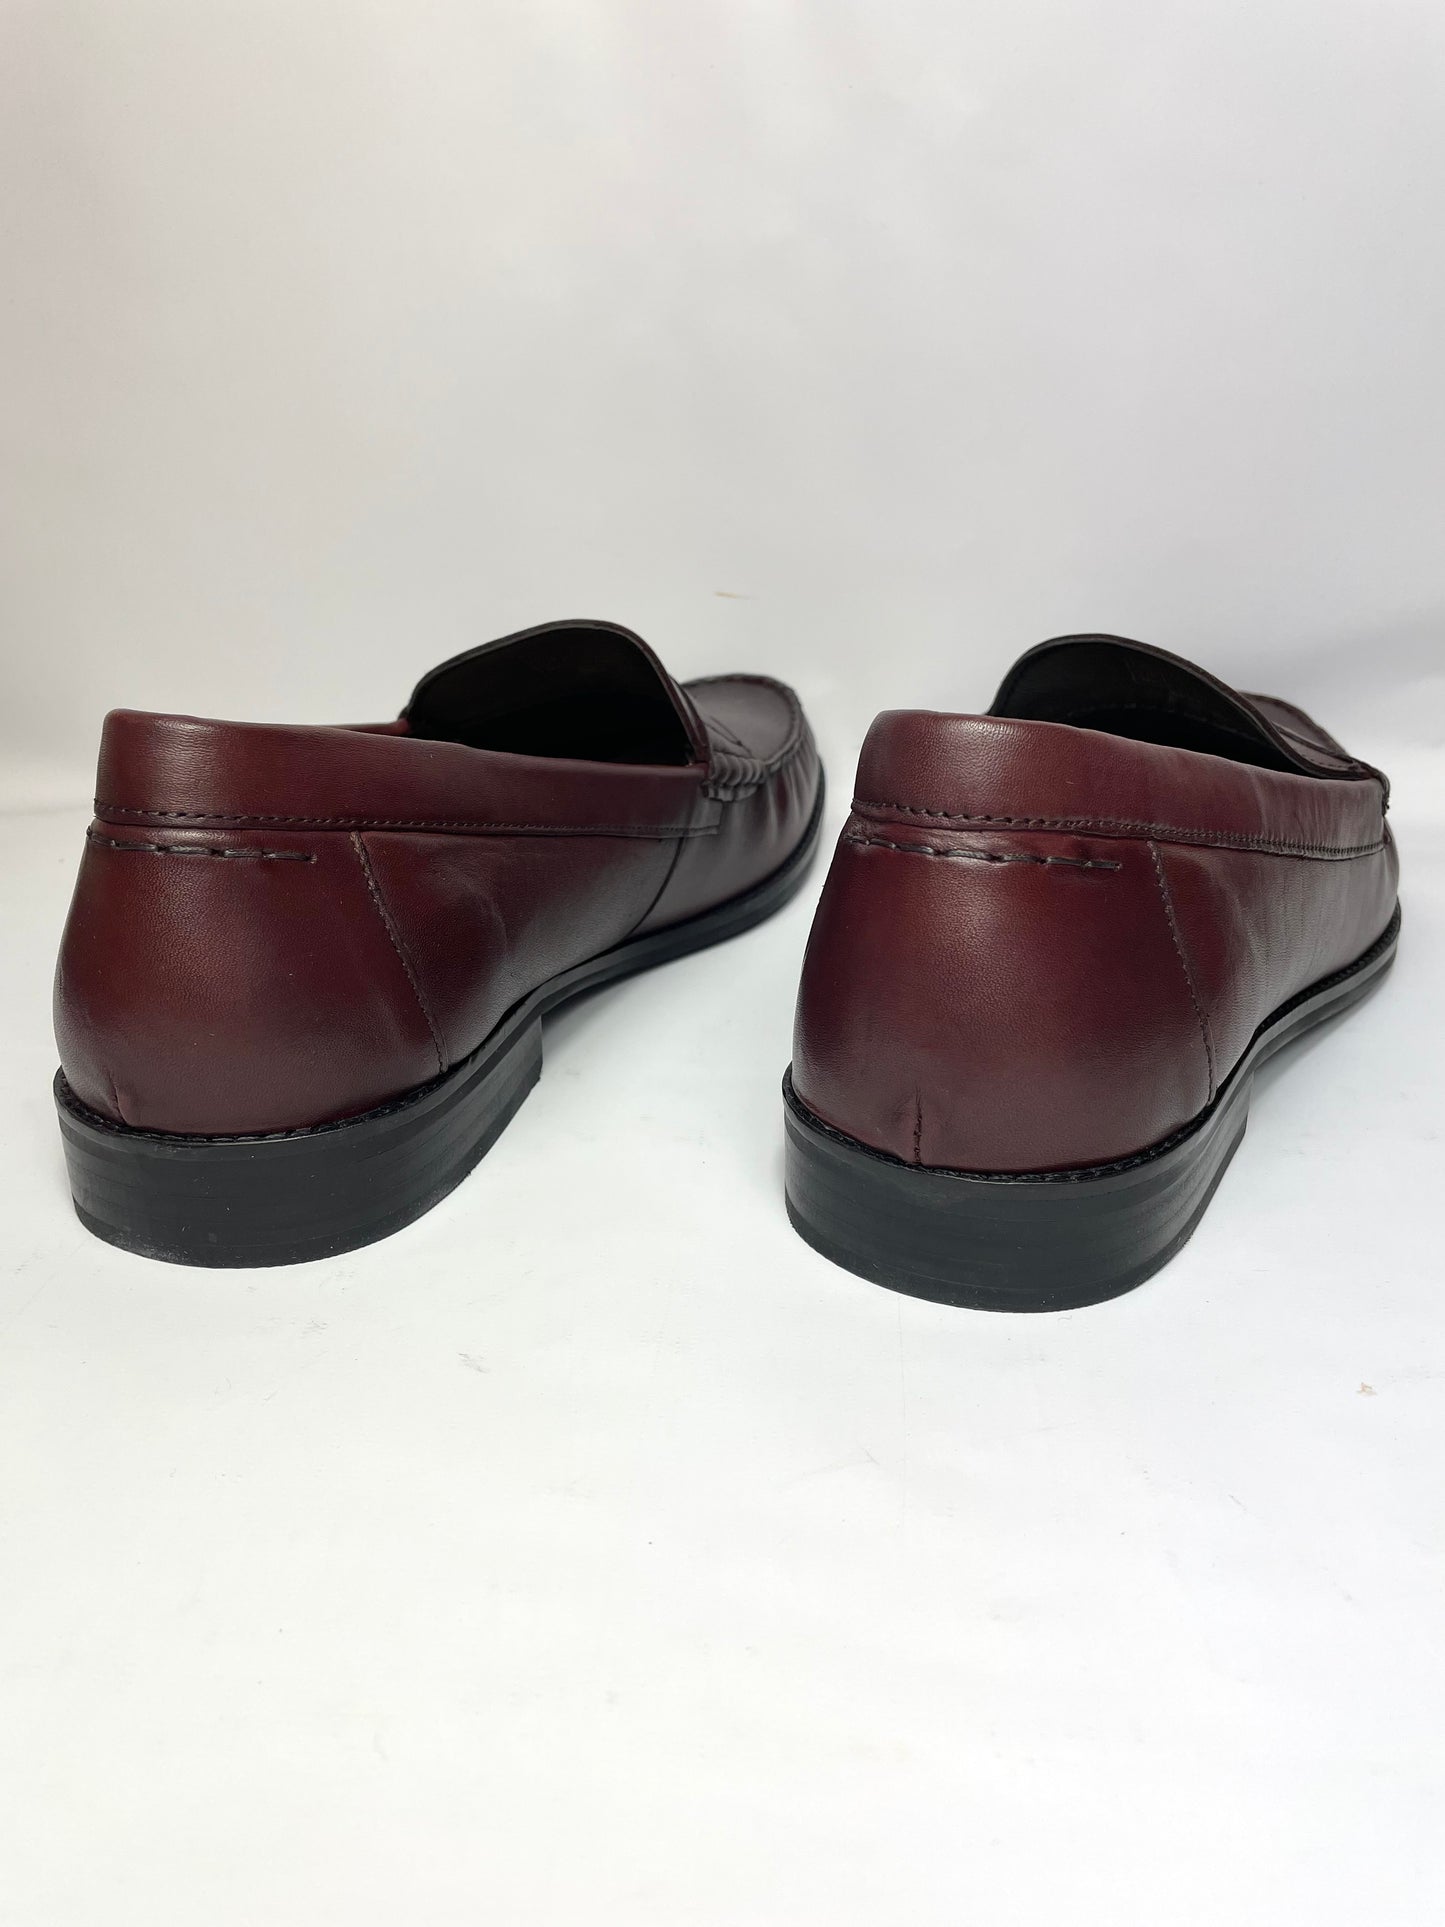 Men's Leather Classic Shoes Brown UK 12 / EU 47